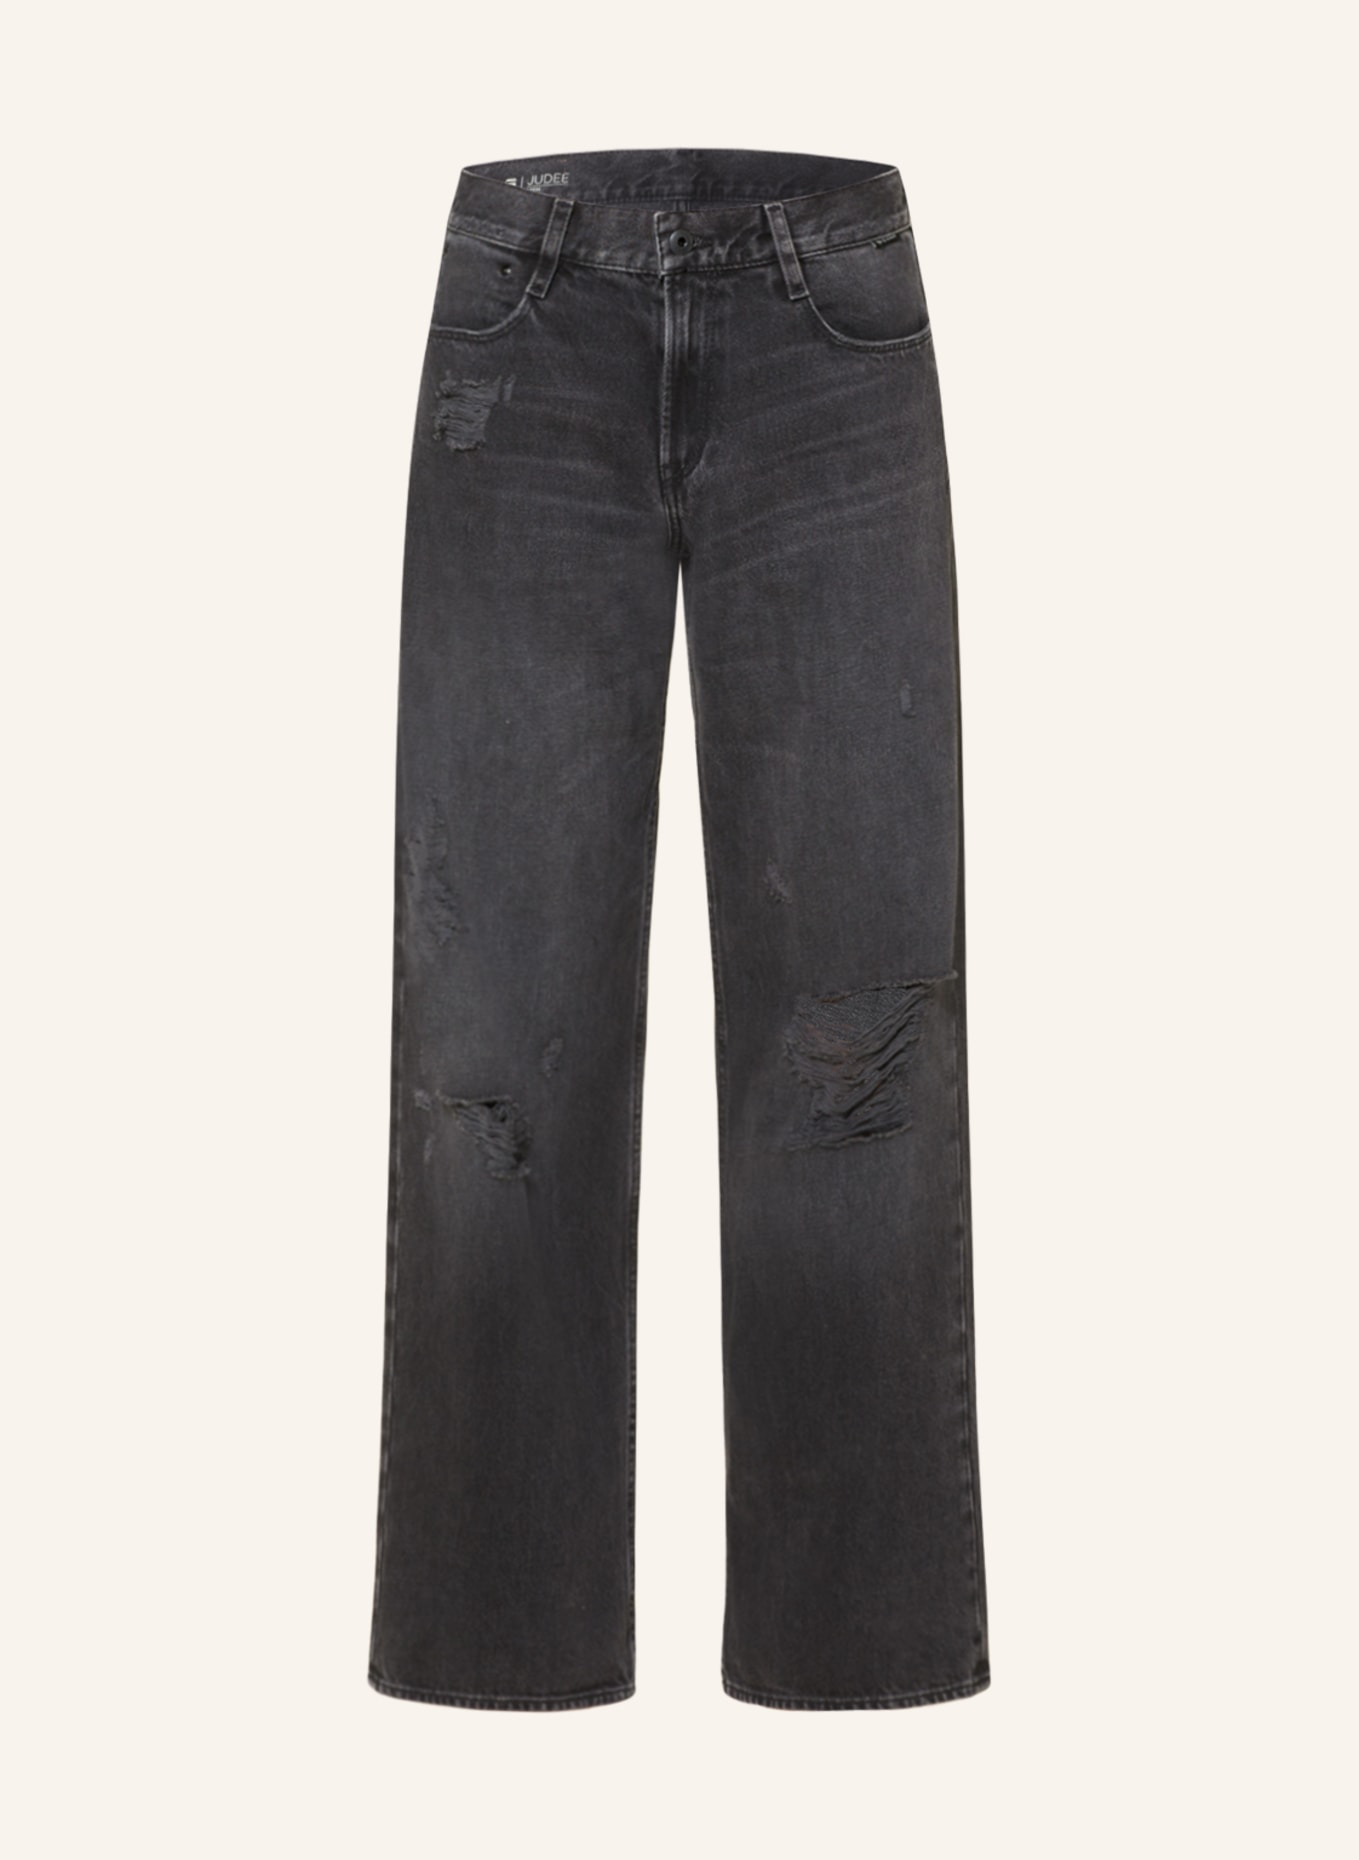 G-Star RAW Jeans JUDEE, Farbe: G131 worn in black smoke ripped (Bild 1)